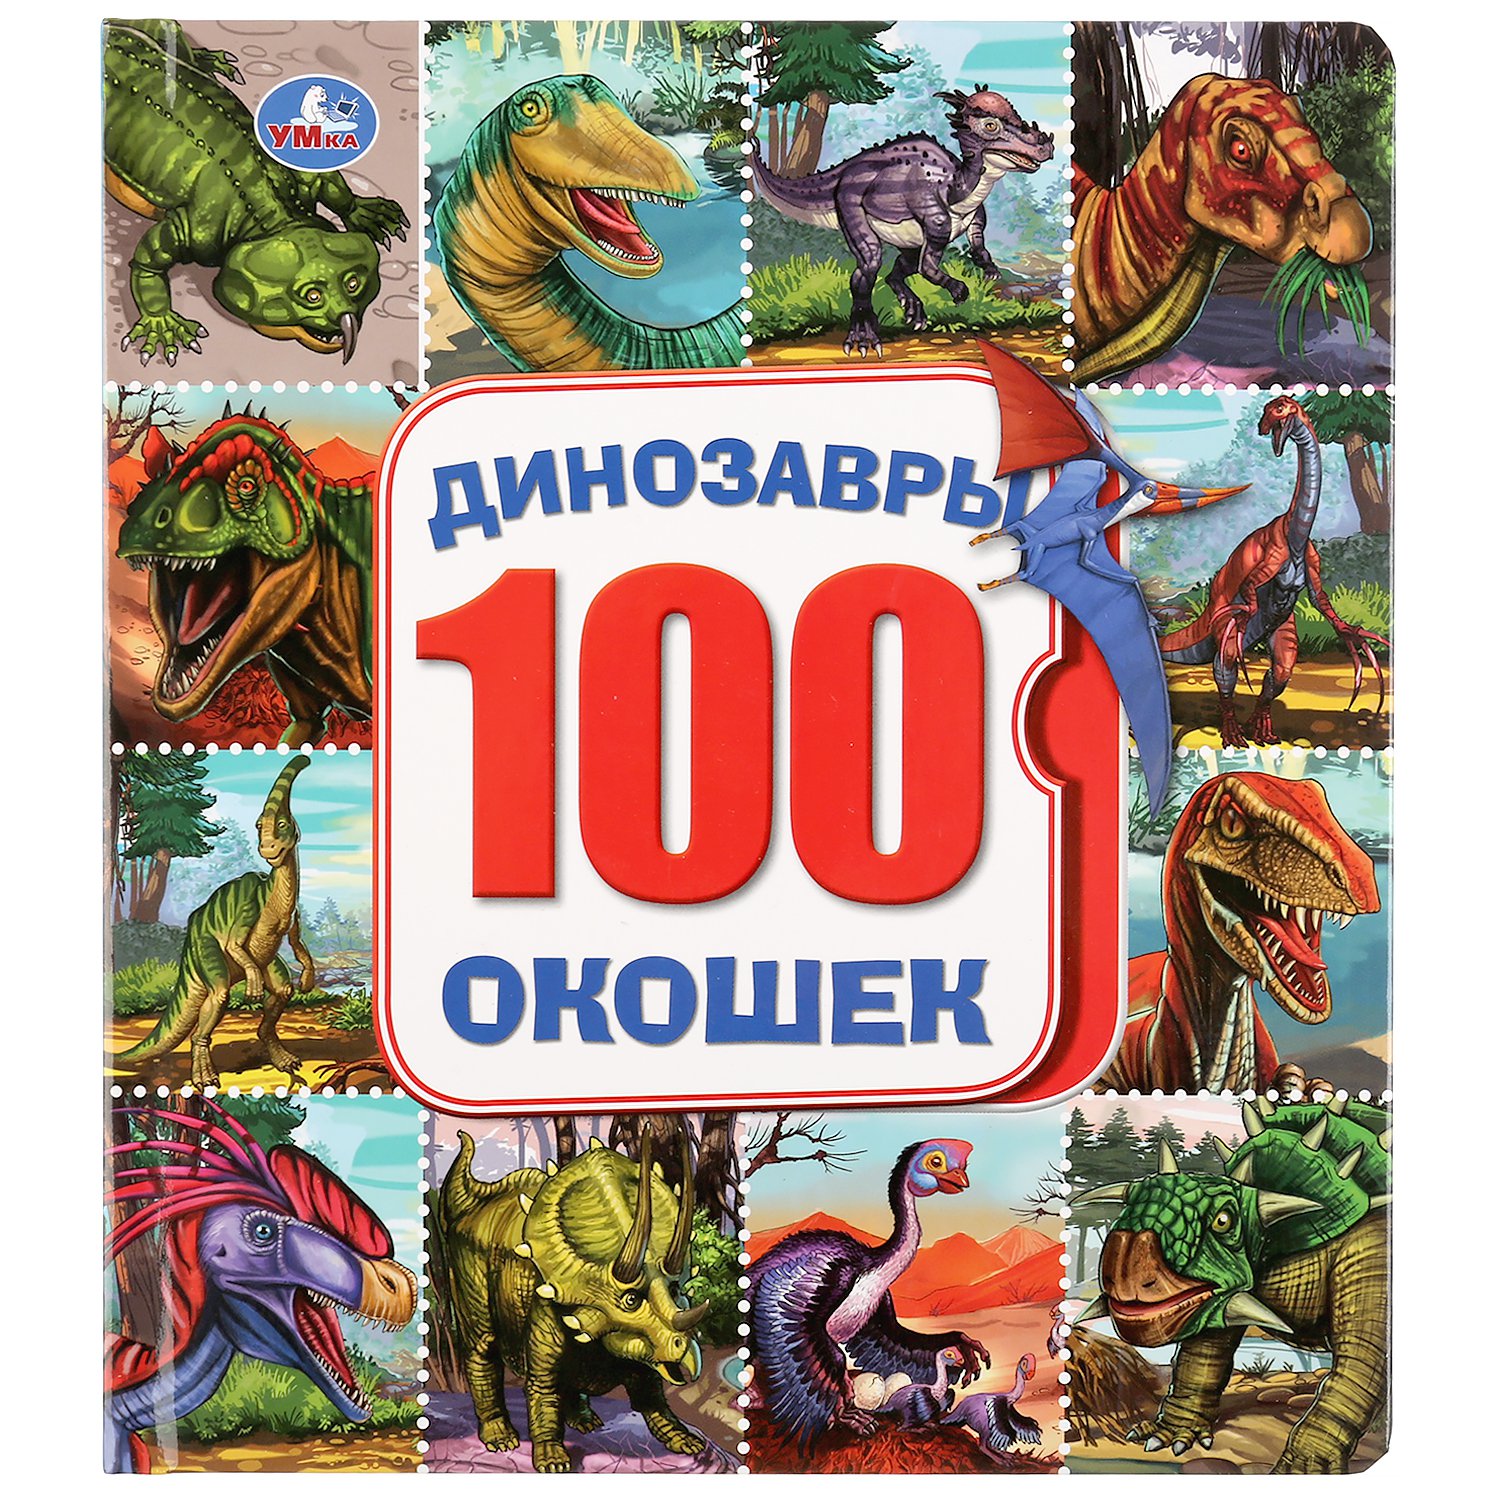 &quot;Умка&quot;. Динозавры. Карт.книга со 100 окошками. Формат: 195х221мм. Объем: 14 карт. стр. в кор.32шт